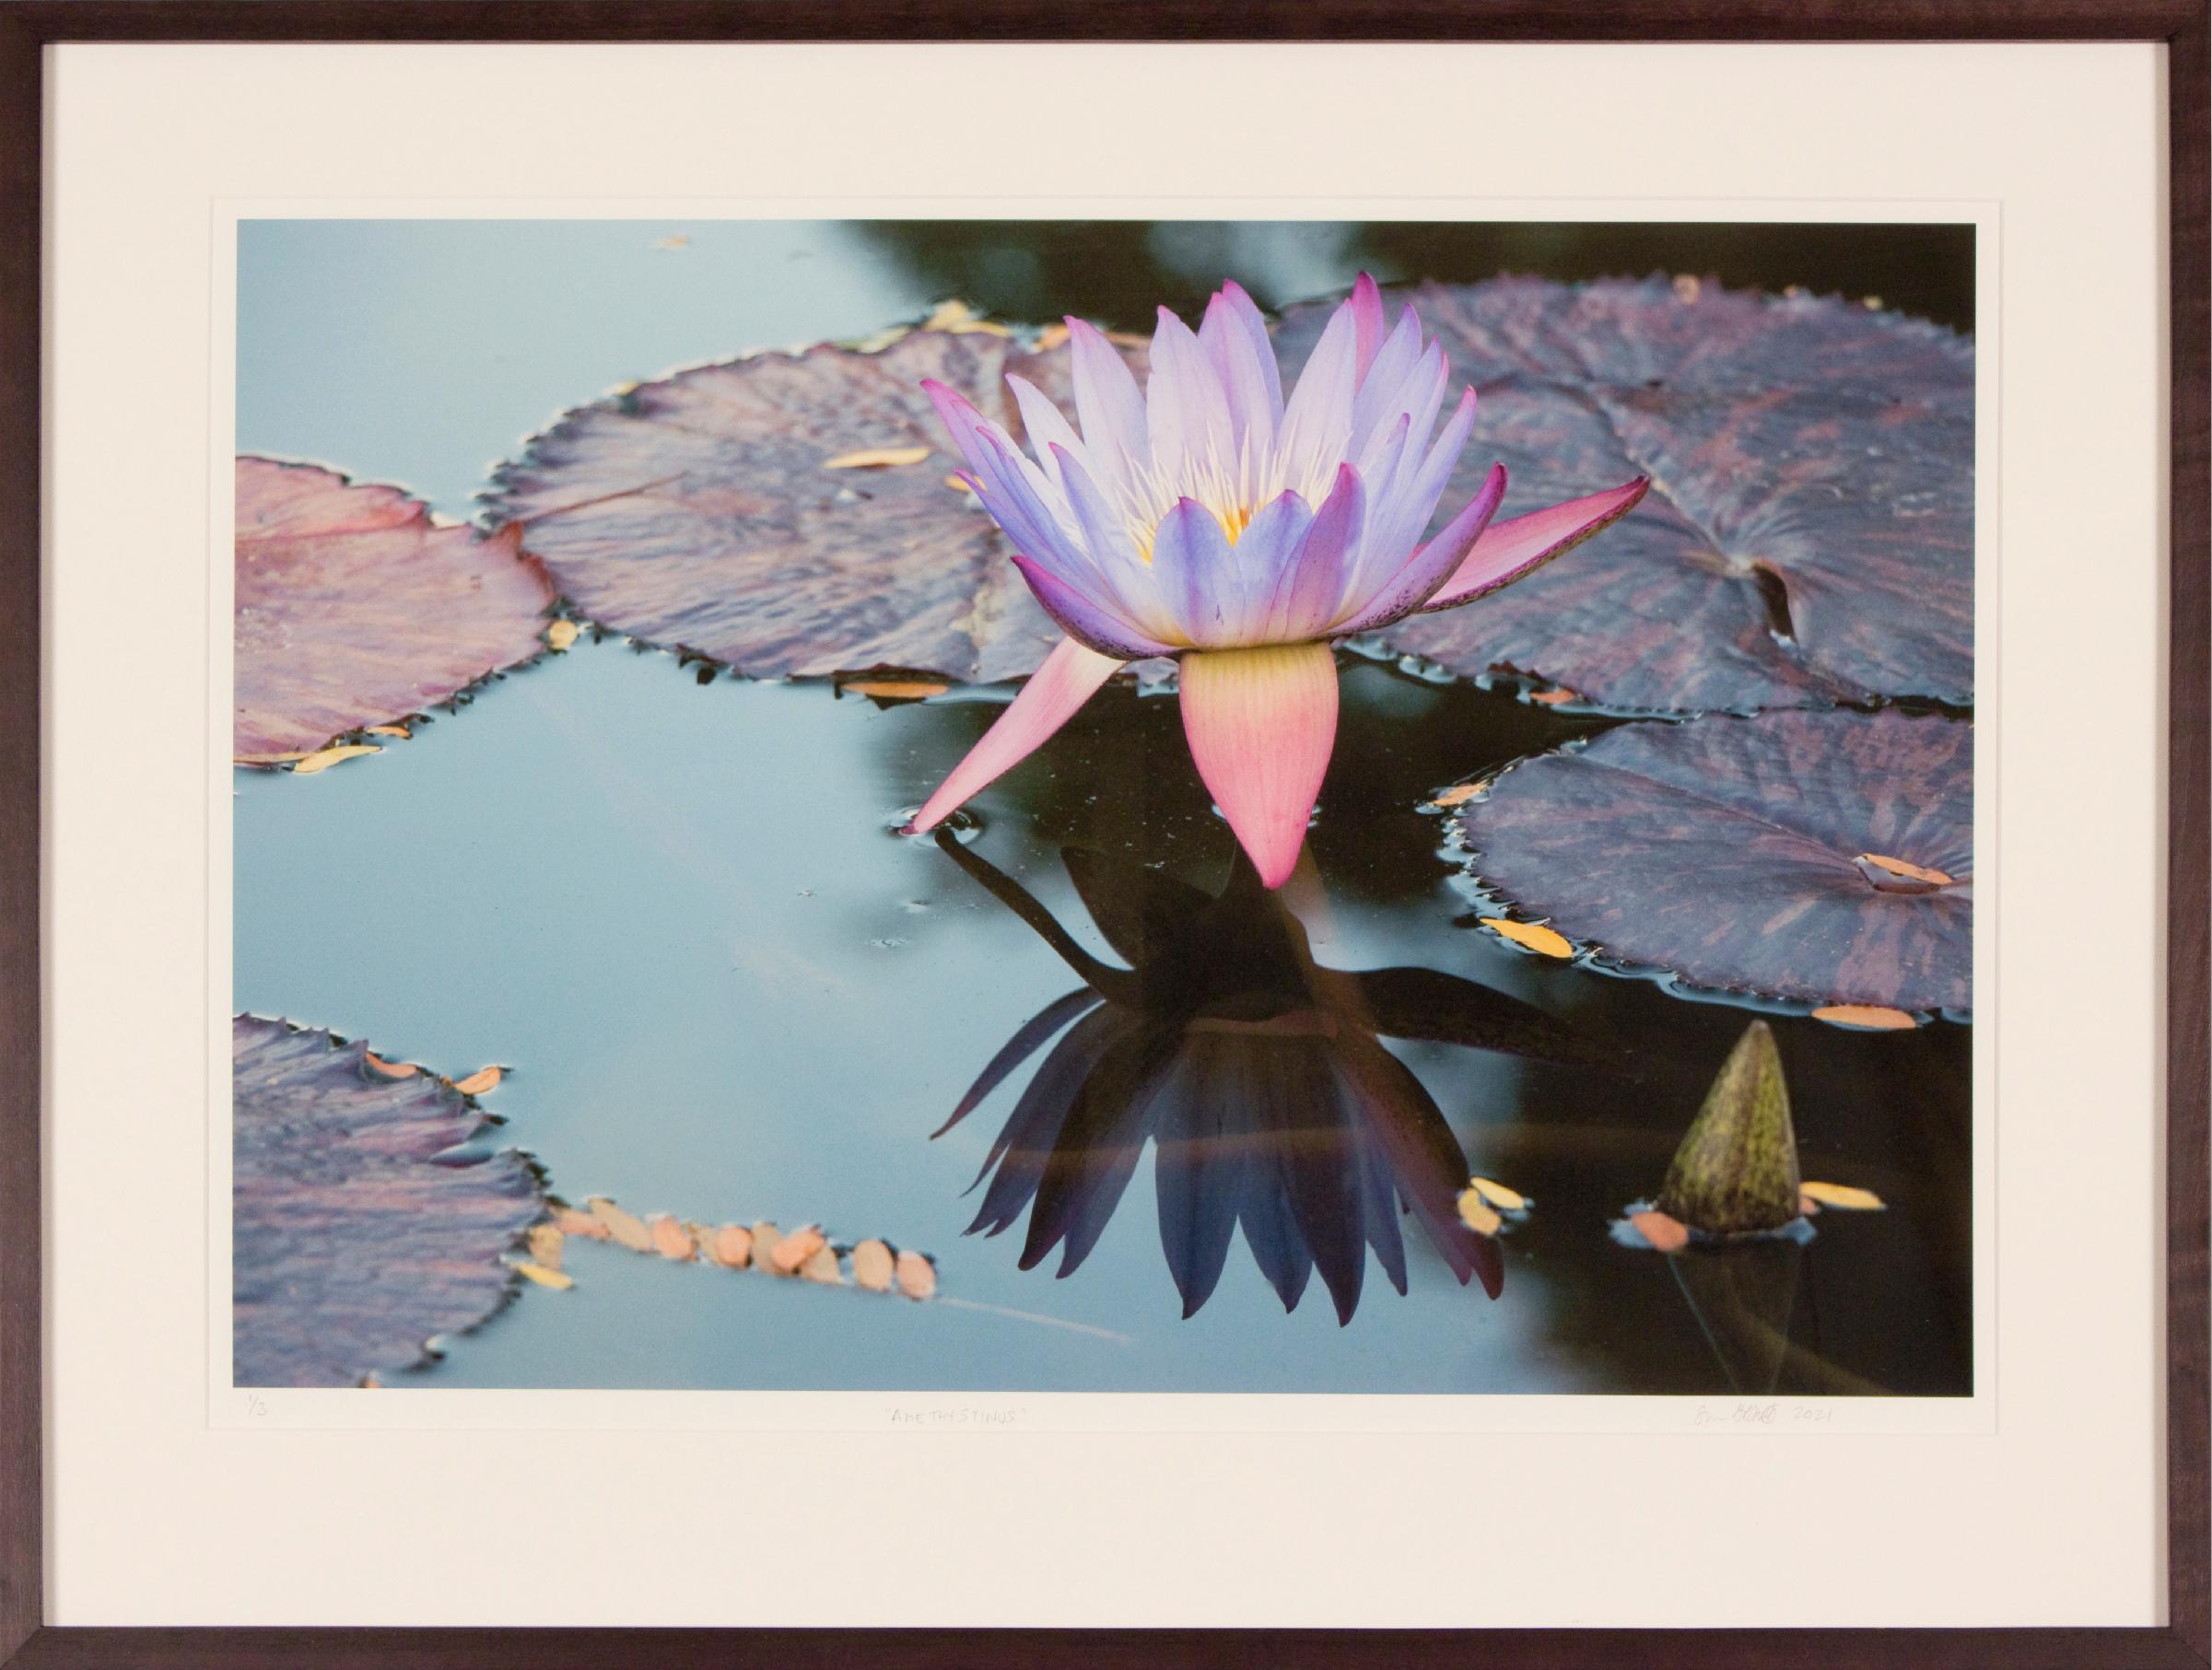 Susan Goldsmith Landscape Print - AMETHYSTINUS - Floral Art Photography / Water Lily Reflections / Botanic Garden